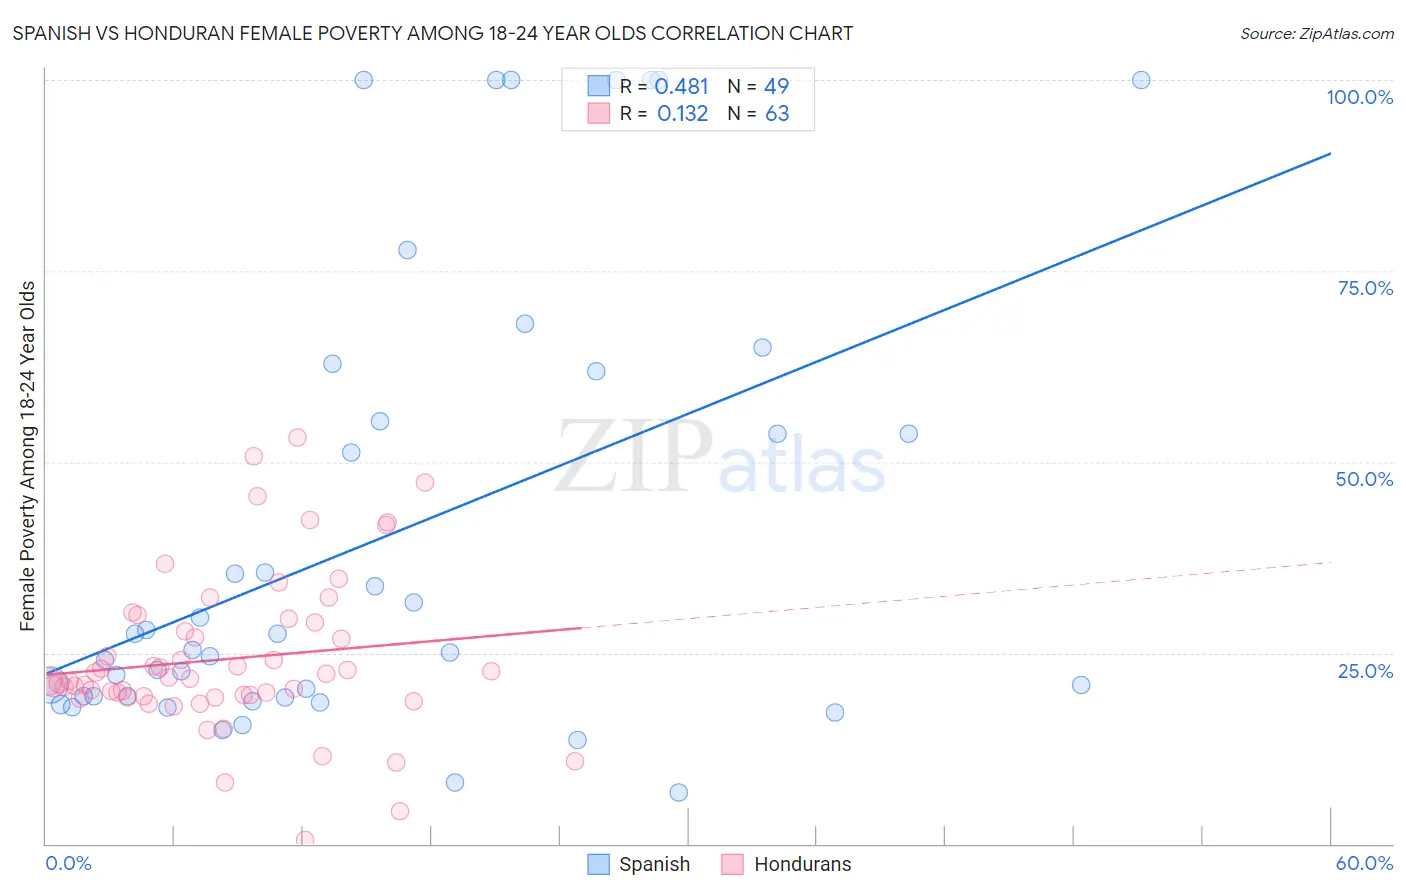 Spanish vs Honduran Female Poverty Among 18-24 Year Olds